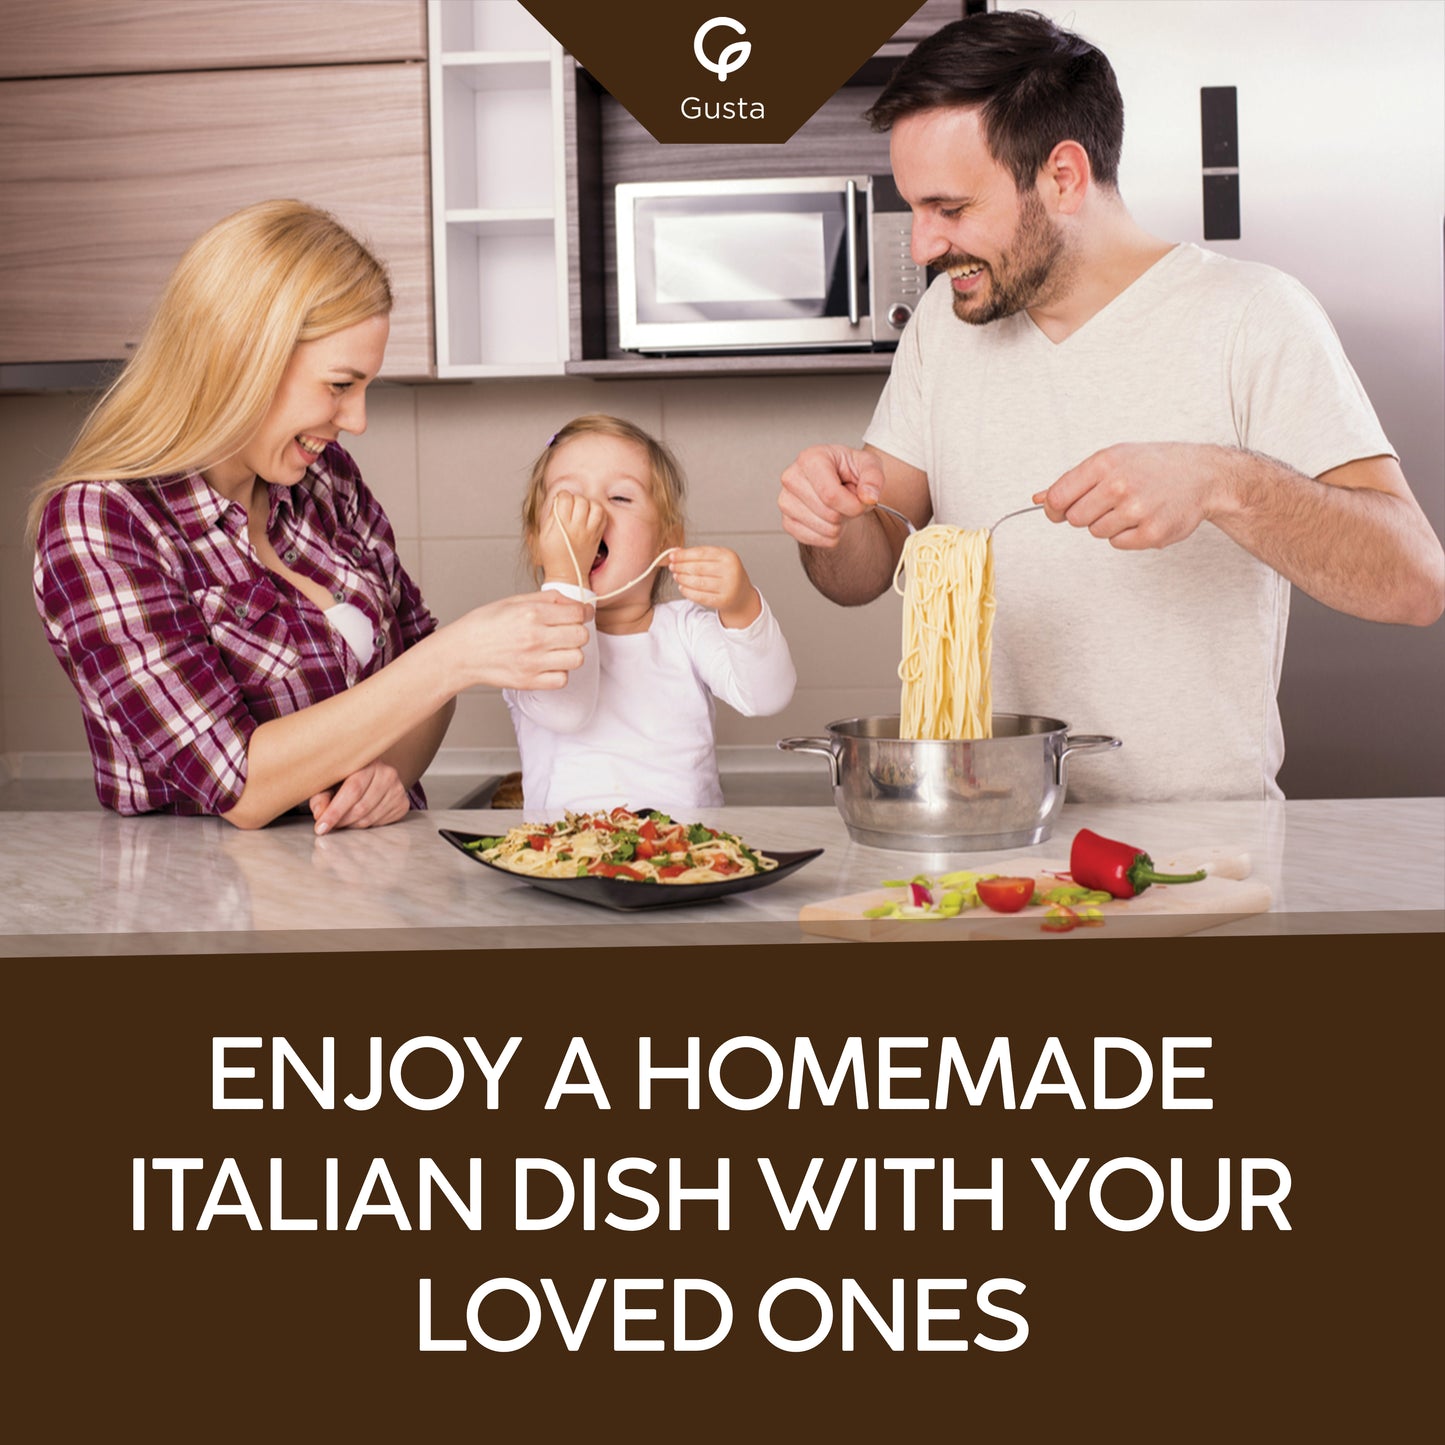 Gusta Spaghetti Pasta - USDA Organic - Non-GMO Durum Wheat Semolina